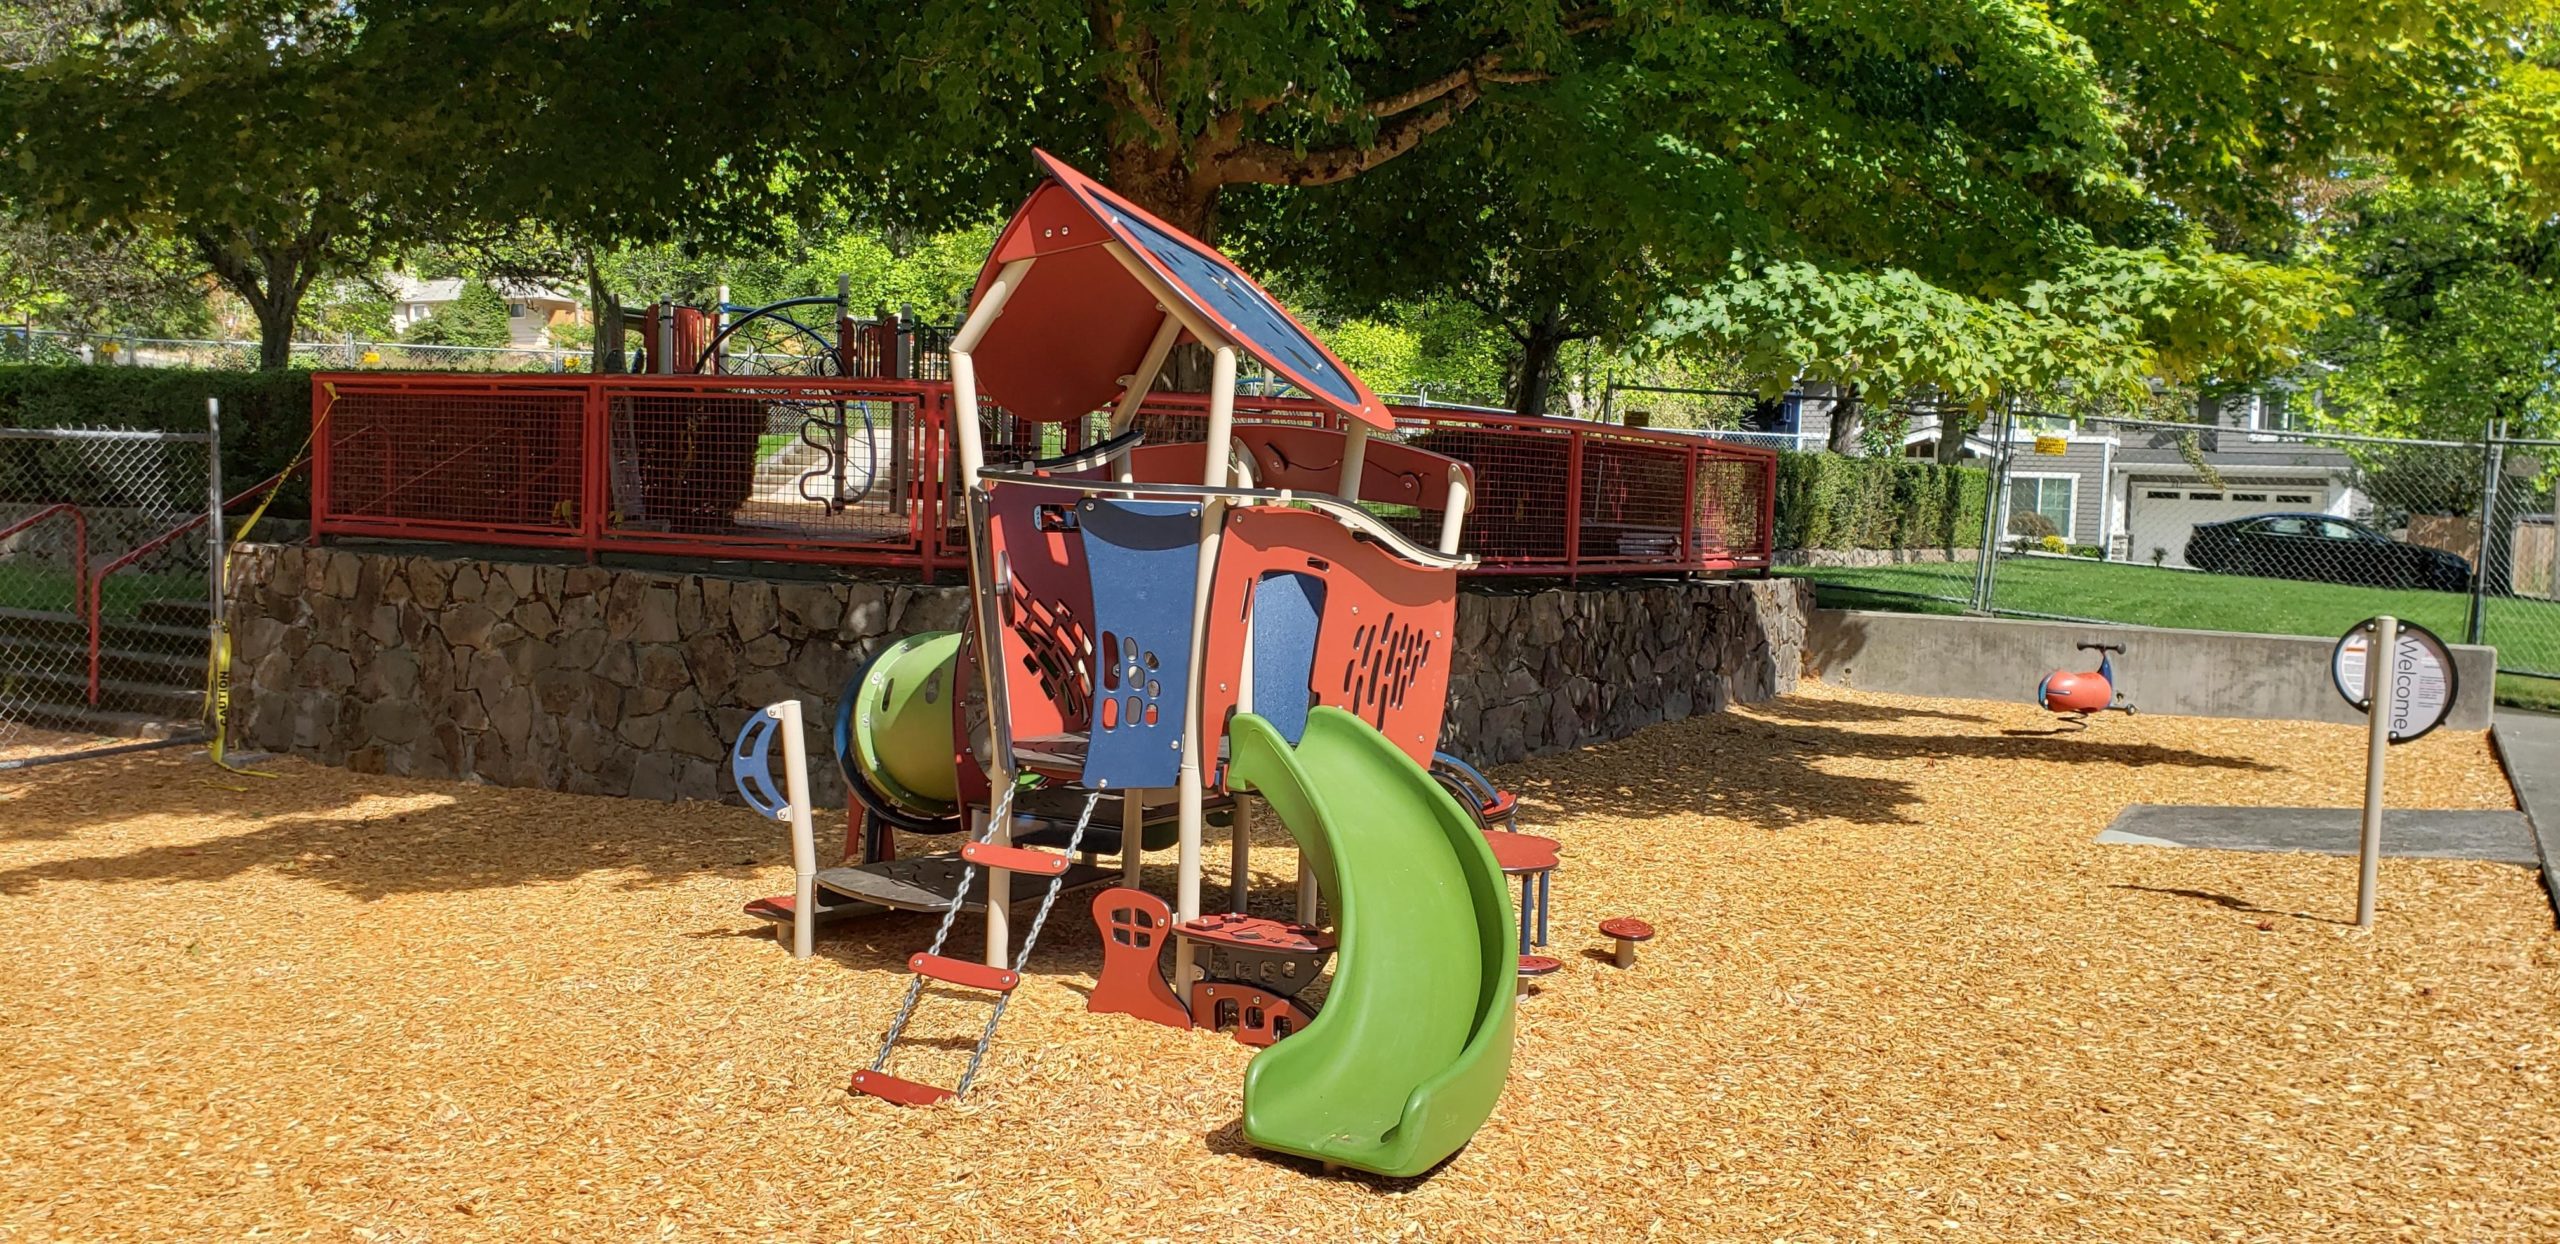 Evergreen Park Playground